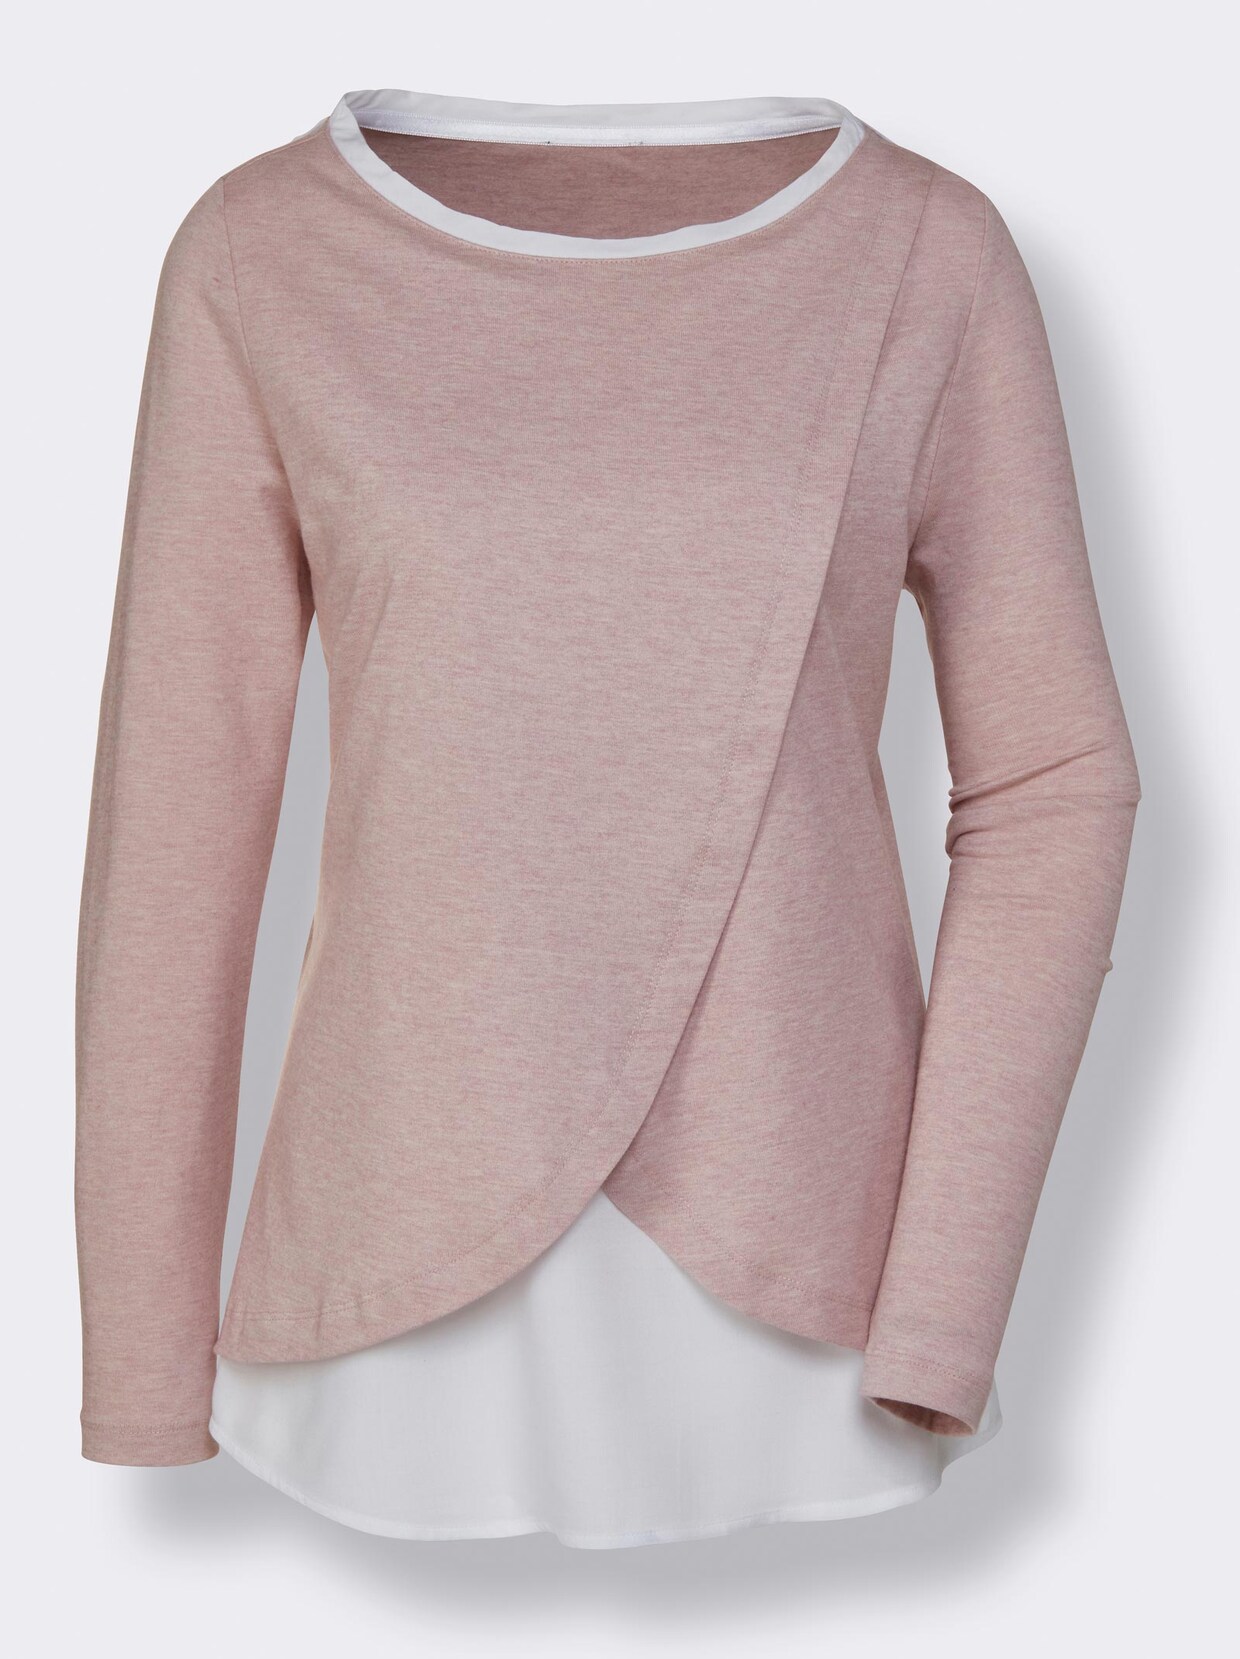 Creation L Premium Viskose-Woll-Shirt - rosé-meliert